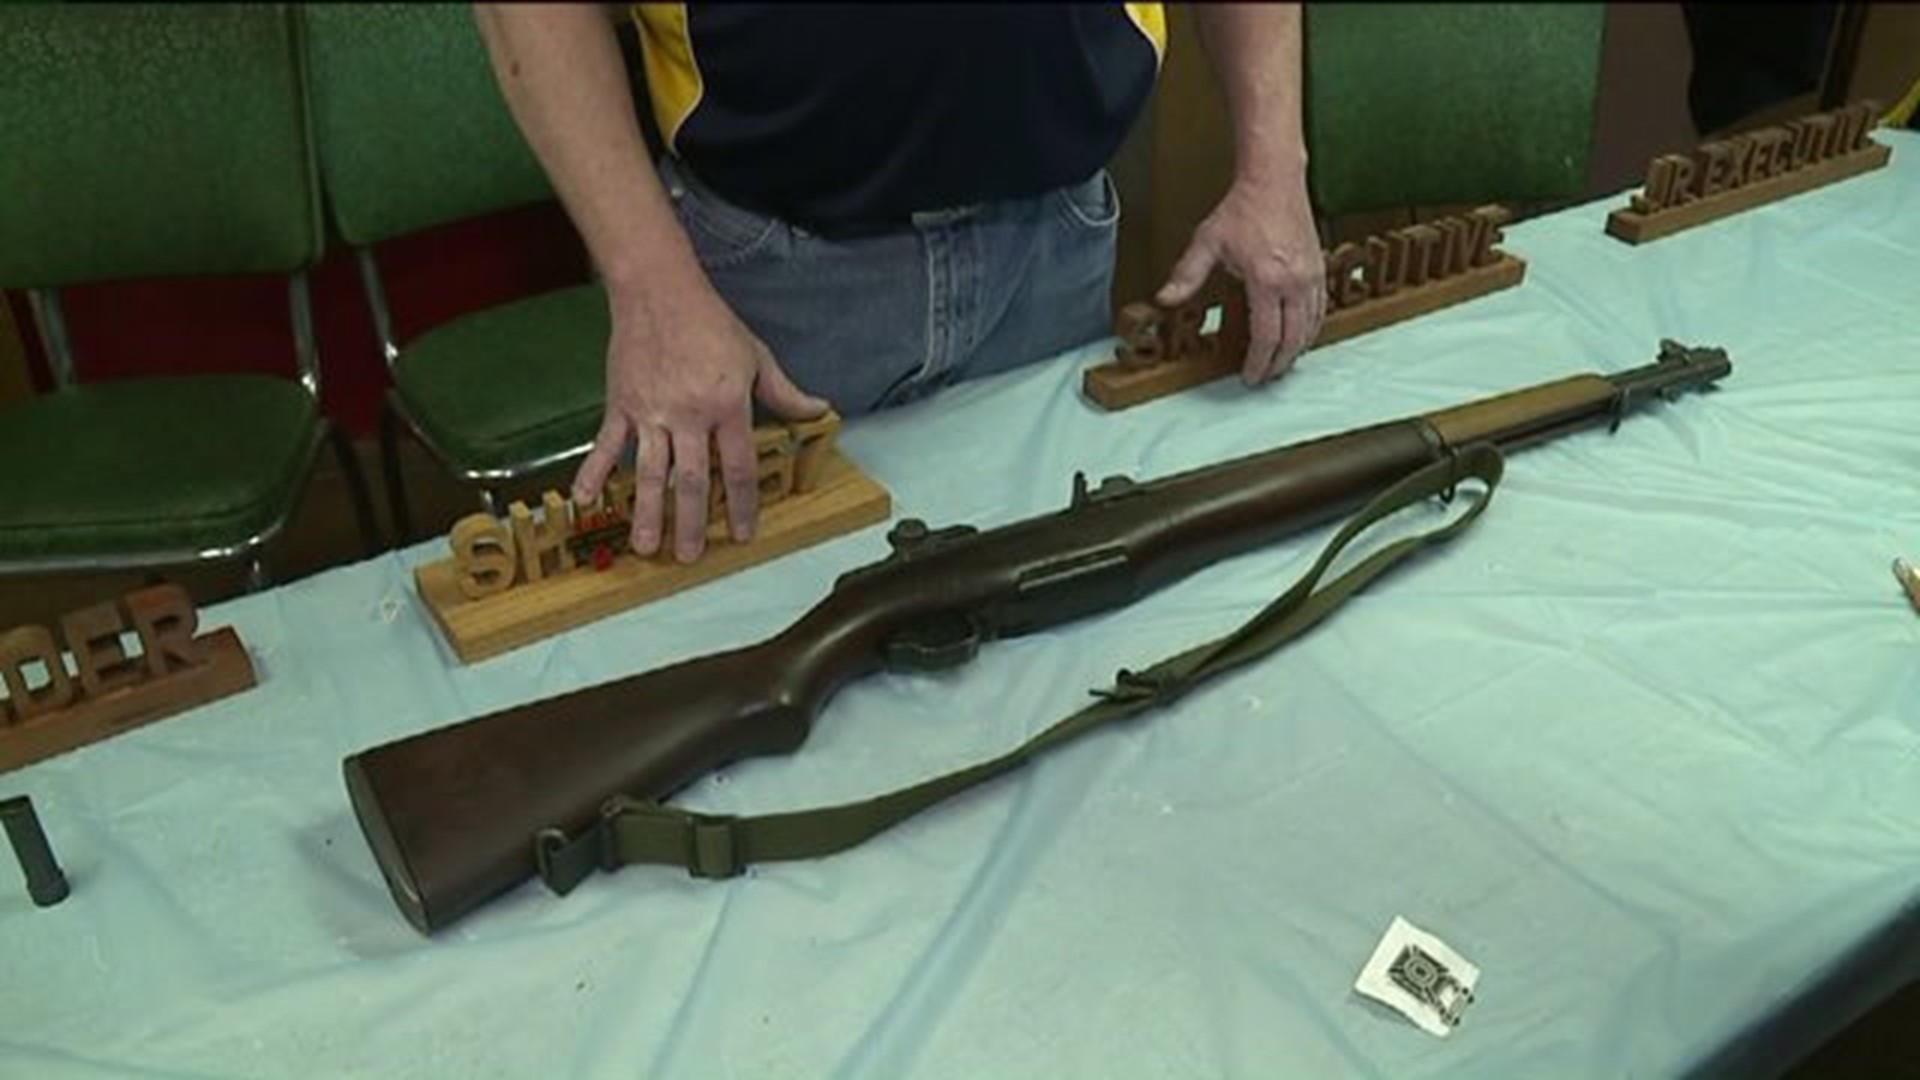 American Legion in Minersville Missing 26 Rifles